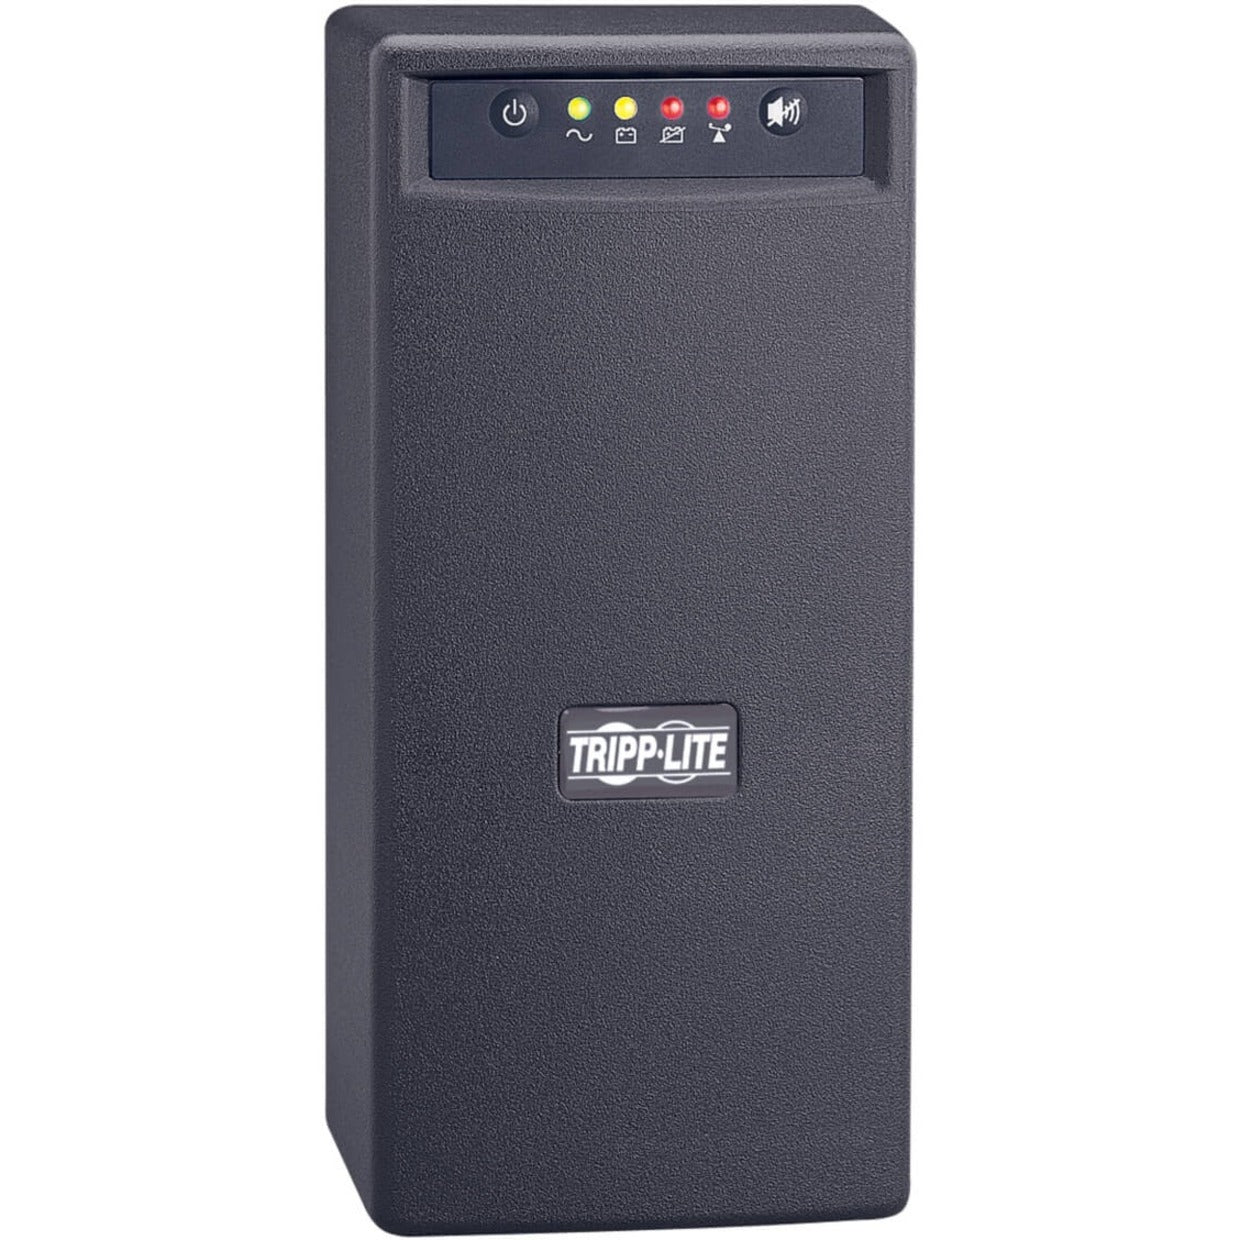 Tripp Lite OMNIVS800 800VA UPS Power Protection Series, 7 Outlets, 1 USB